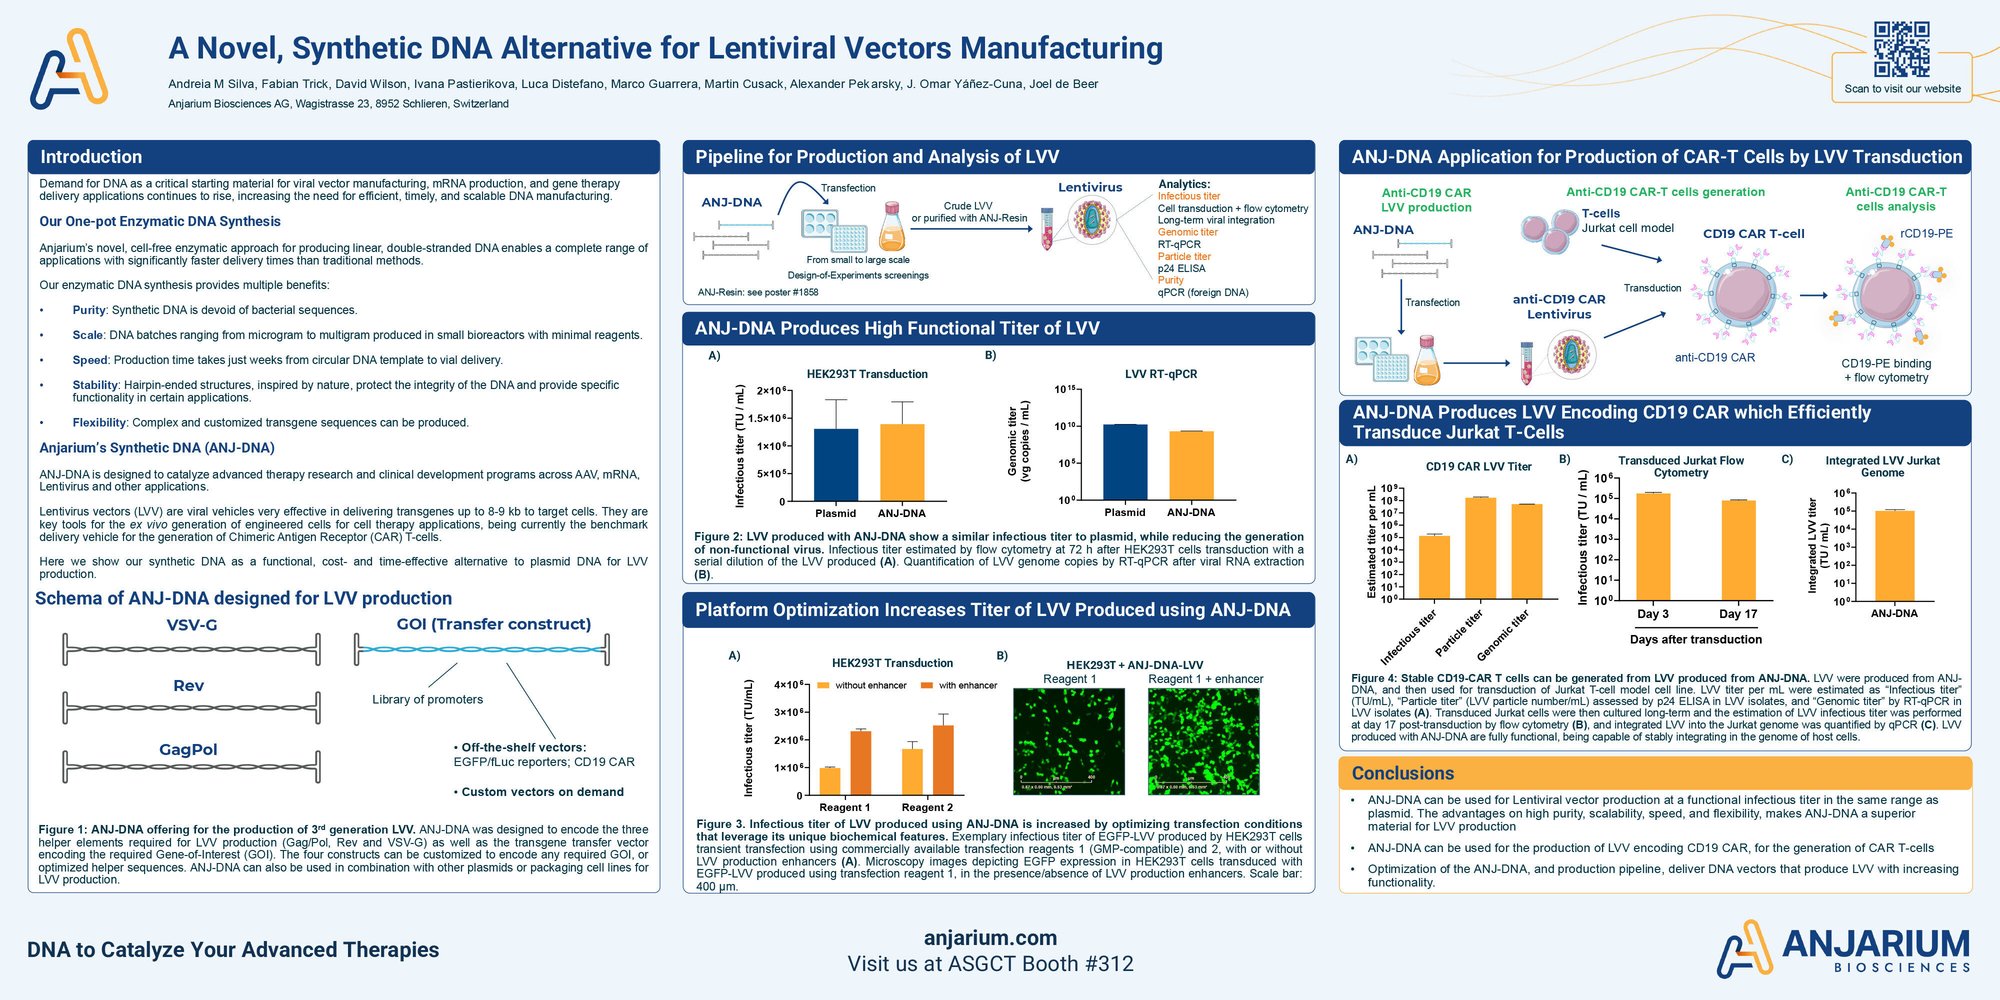 Anjarium_Synthetic_DNA_LVV_Manufacturing.pdf-2